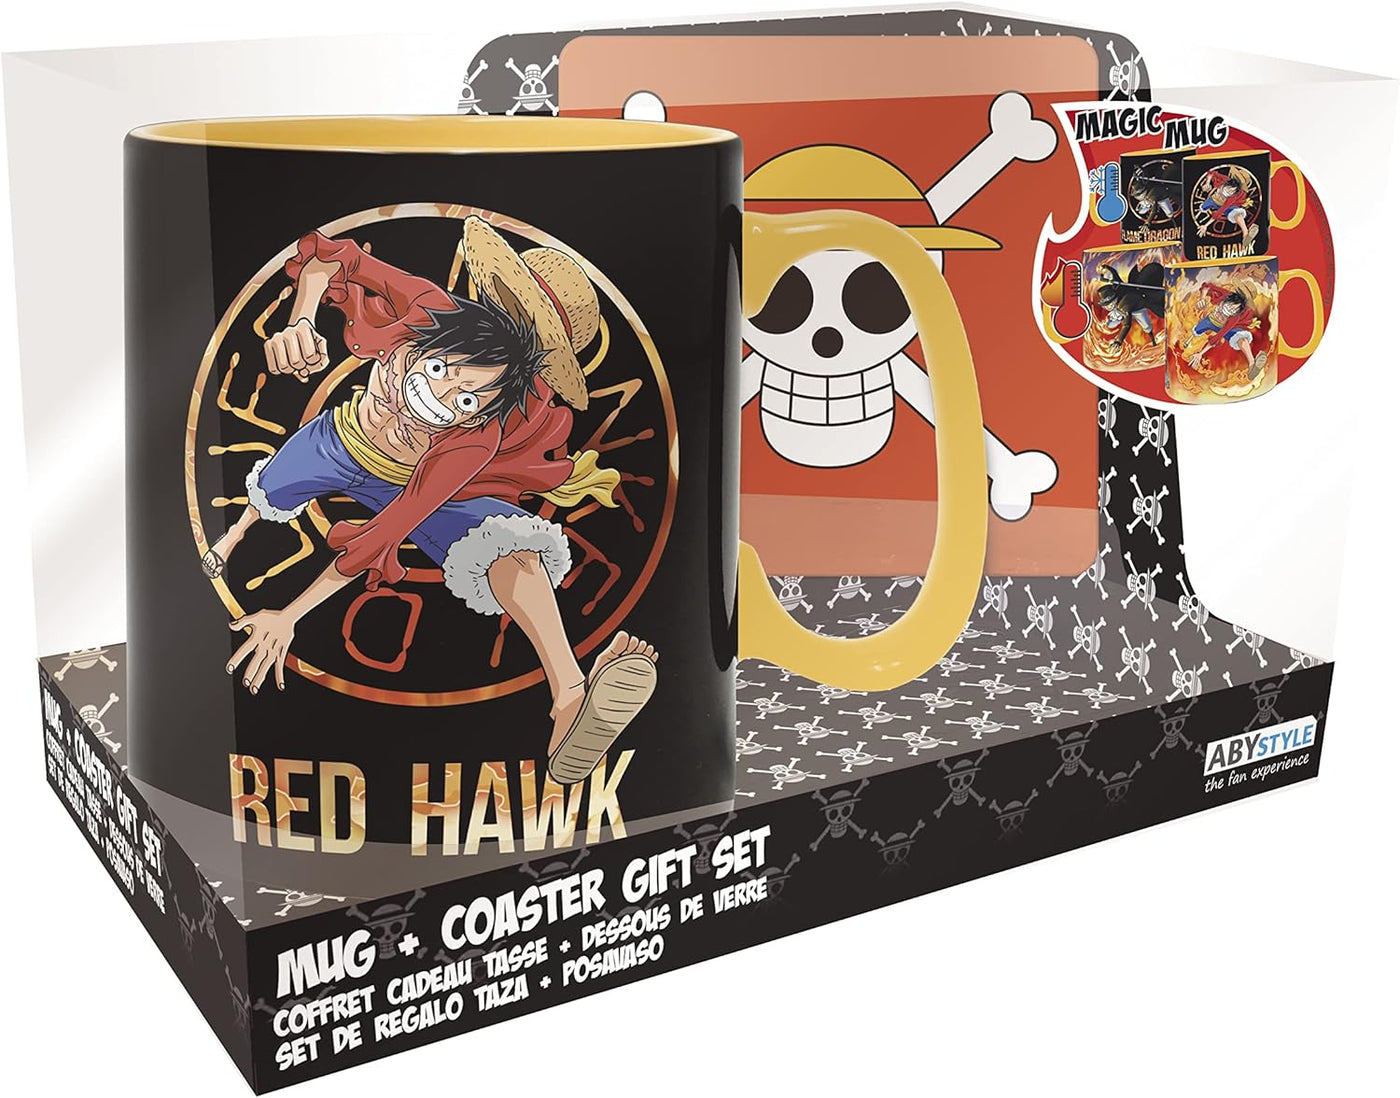 One Piece Luffy & Sabo Magic Heat Change Ceramic Coffee Mug 16 Oz. & Coaster Gift Set